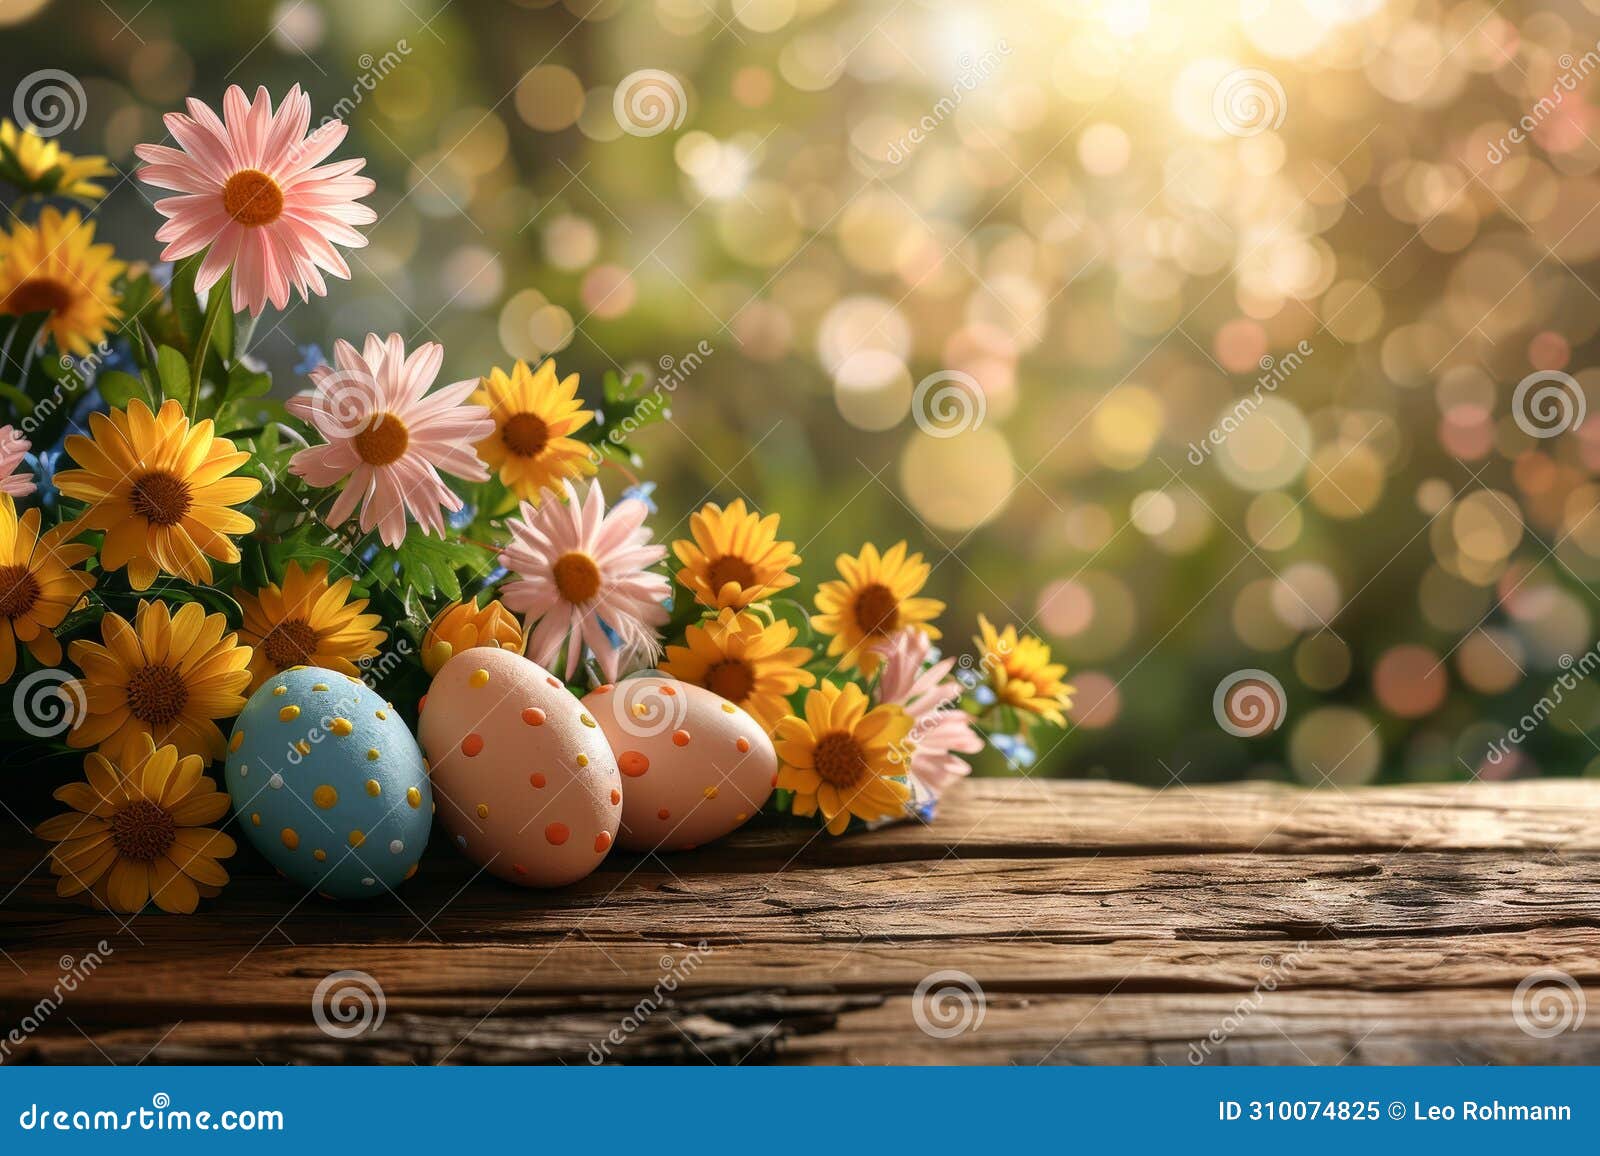 happy easter egg cracking eggs joyful jaunt basket. white easter surprise bunny border space. eggstraordinary background wallpaper